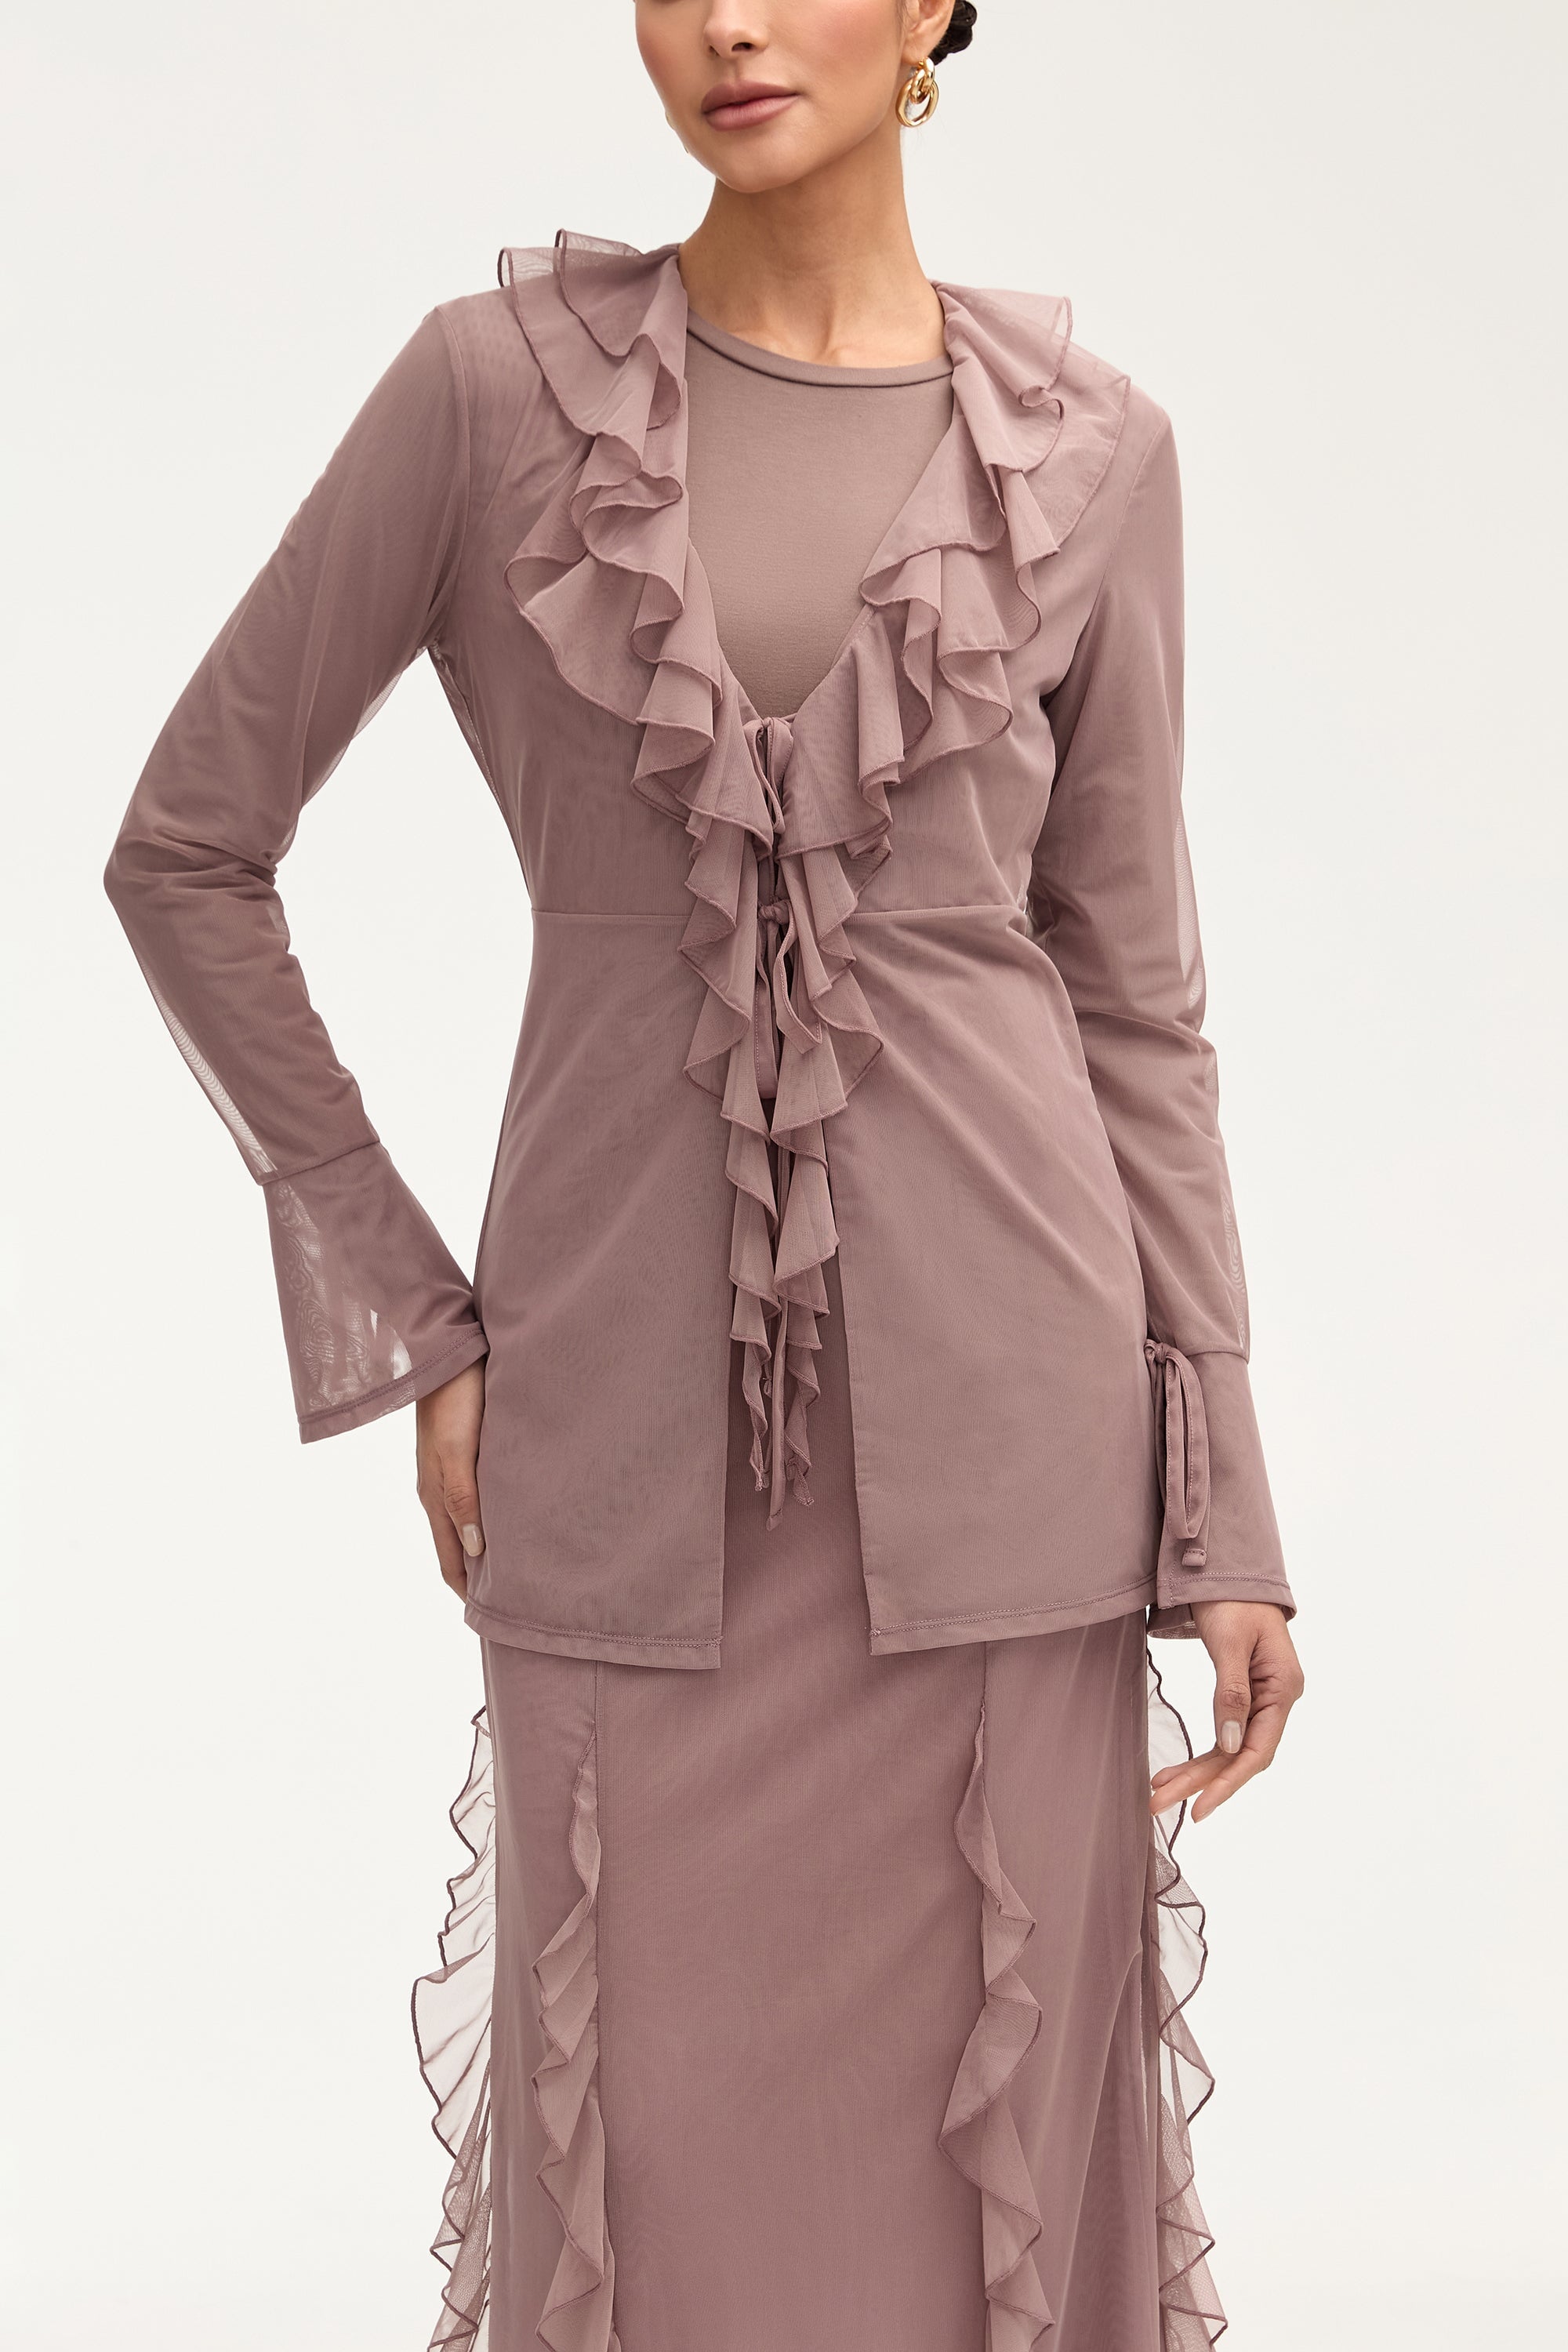 Jida Ruffle Tie Front Mesh Top - Twilight Mauve Clothing Veiled 